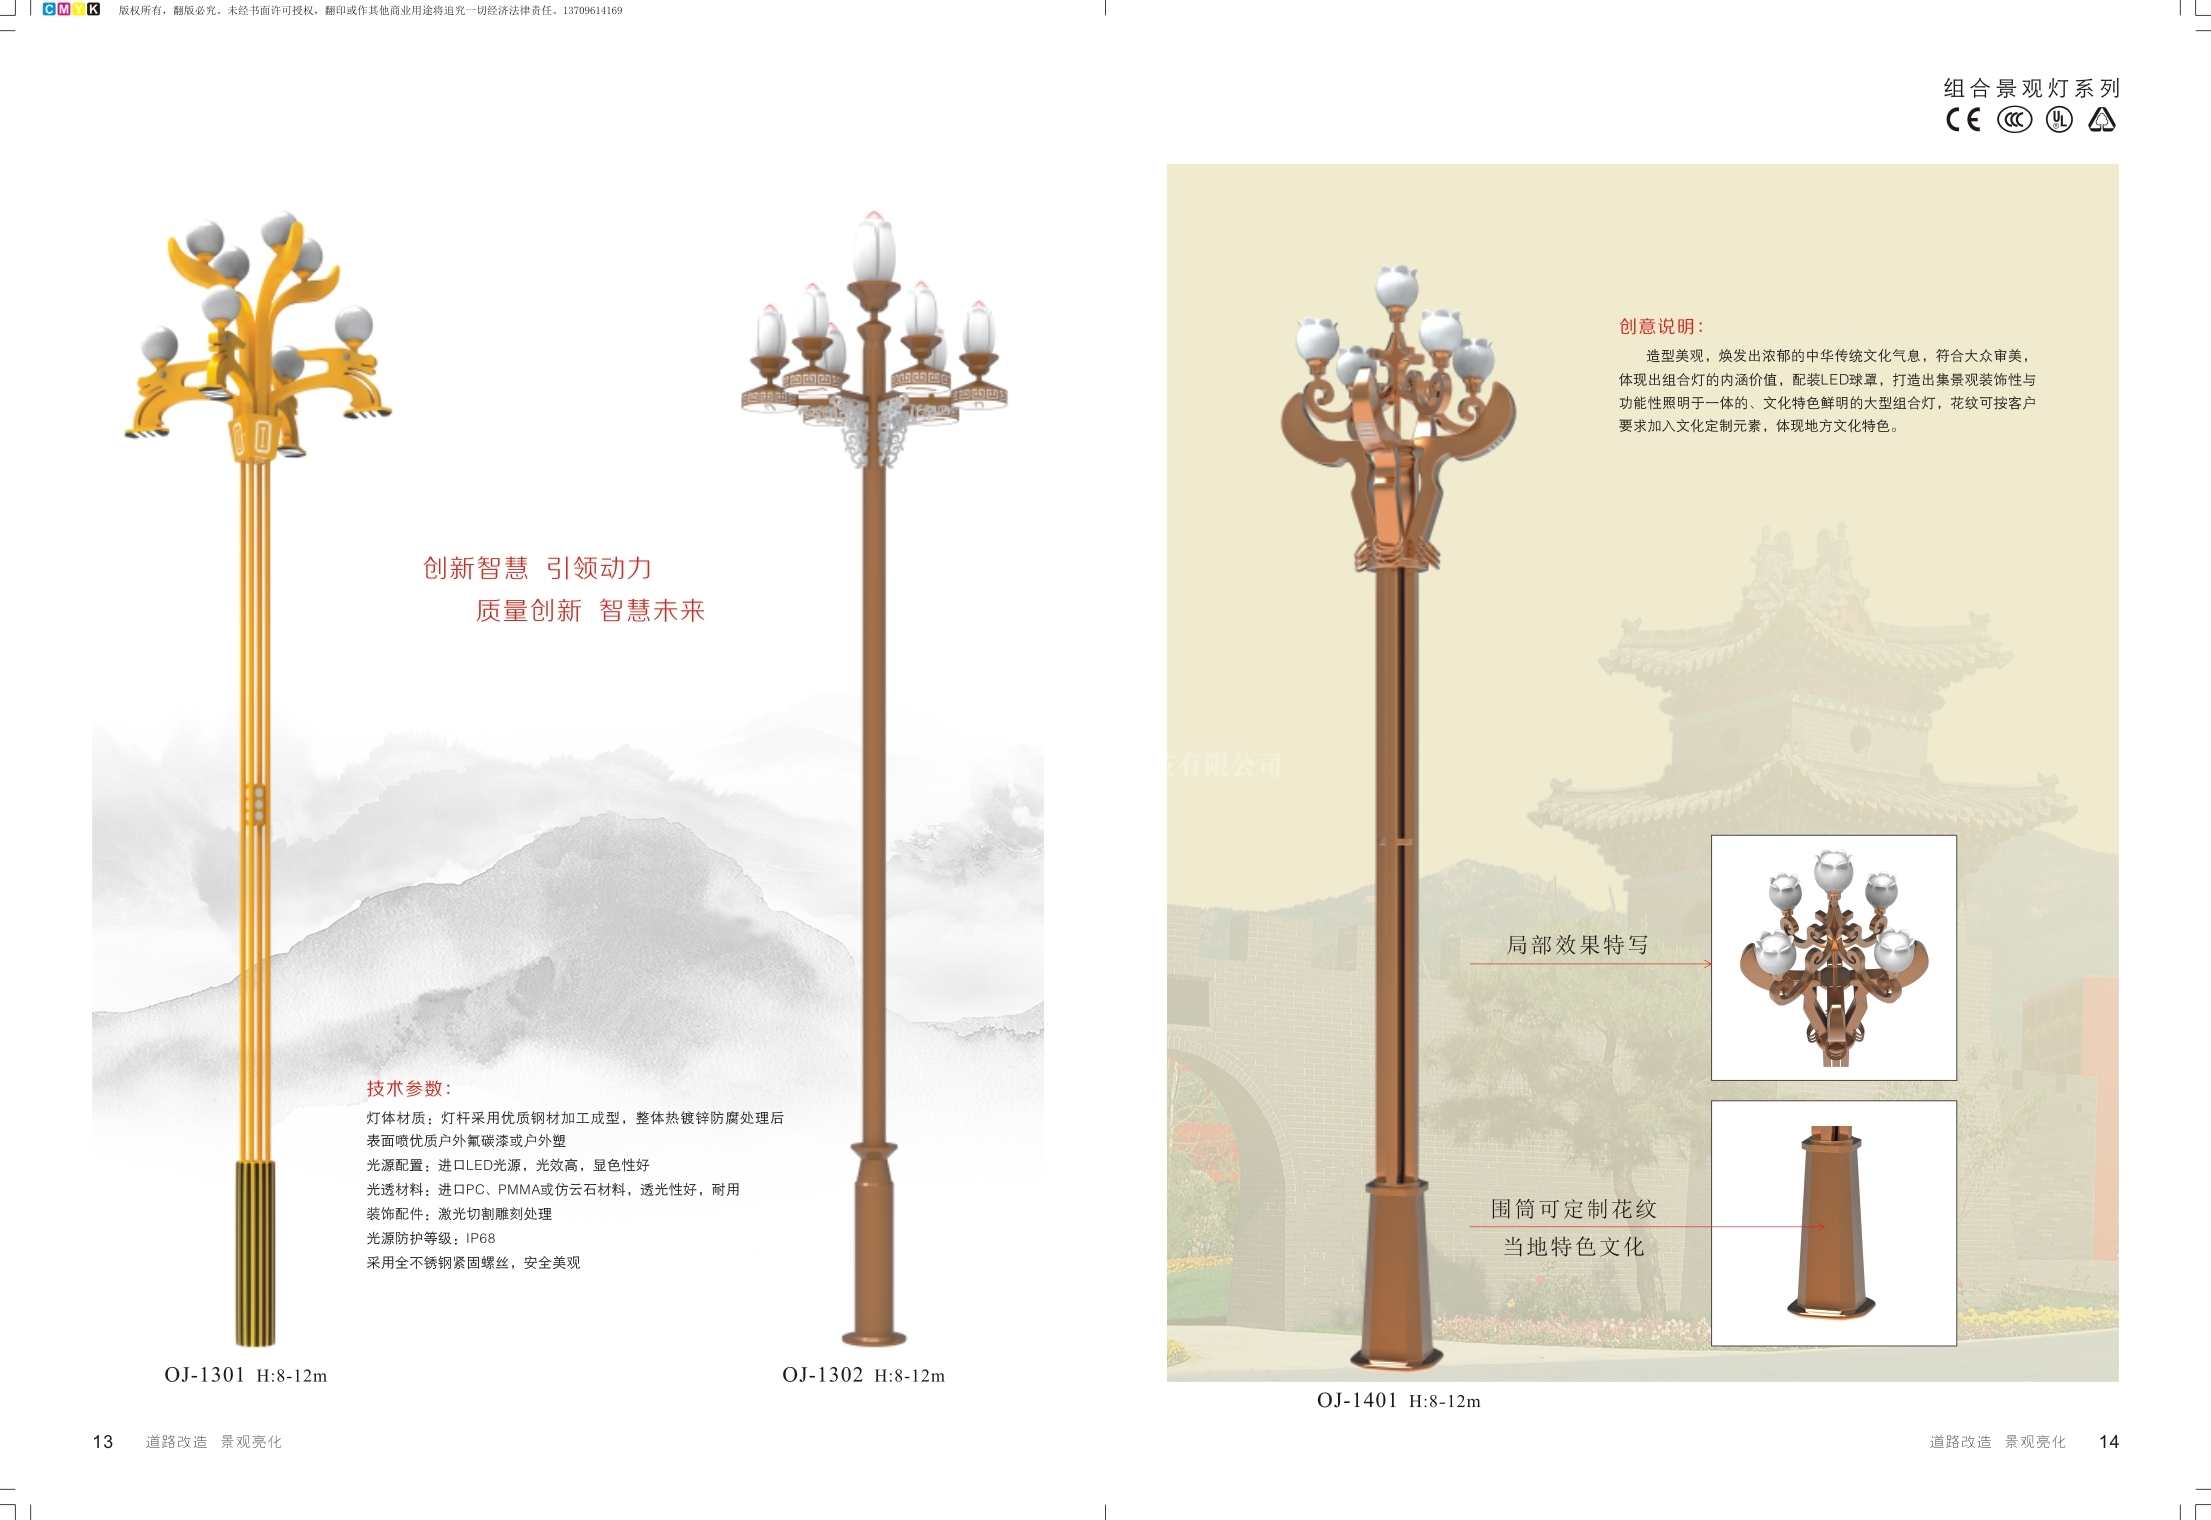 園(yuan)林景觀燈